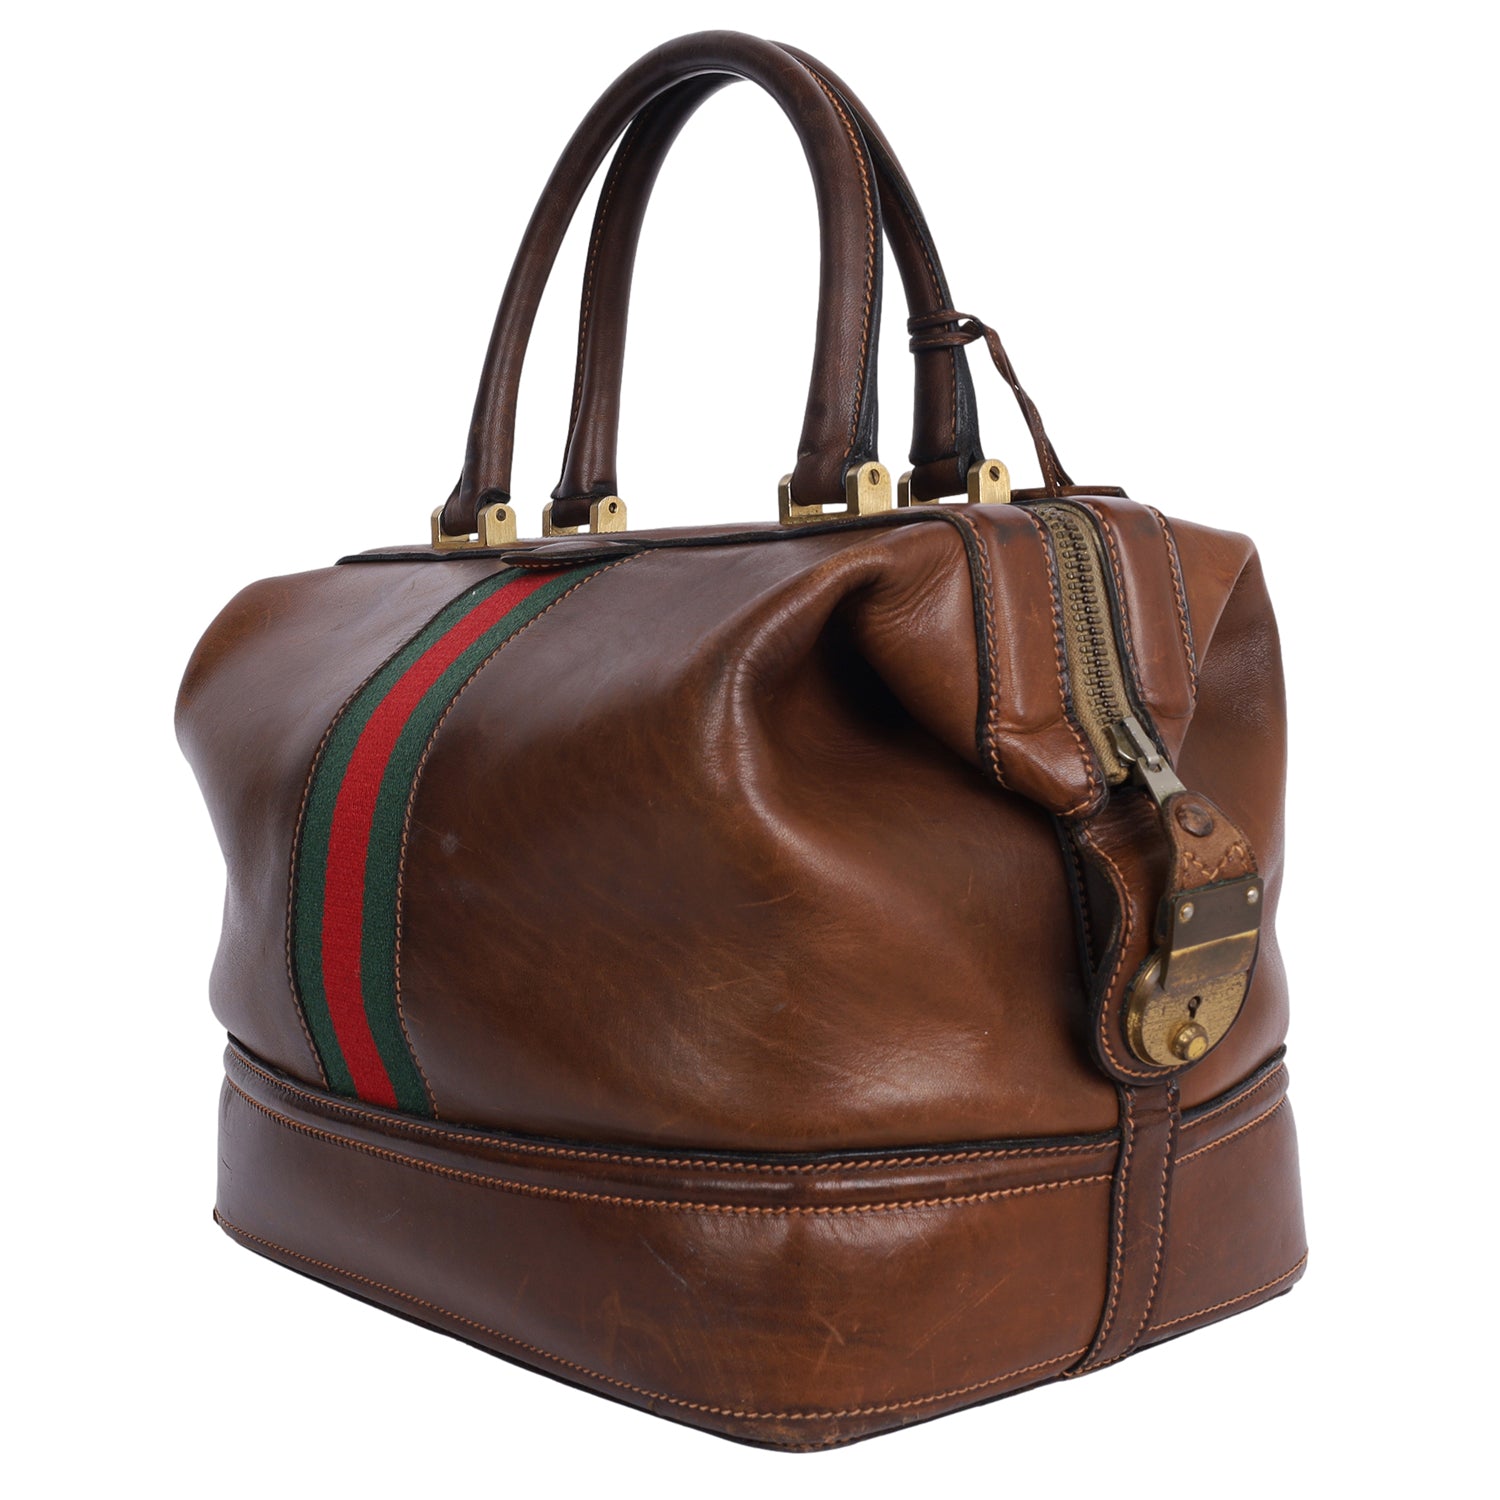 Authentic Vintage Gucci Boston Bag | Doctors Bag | Gucci Bag| Handbag | Bag